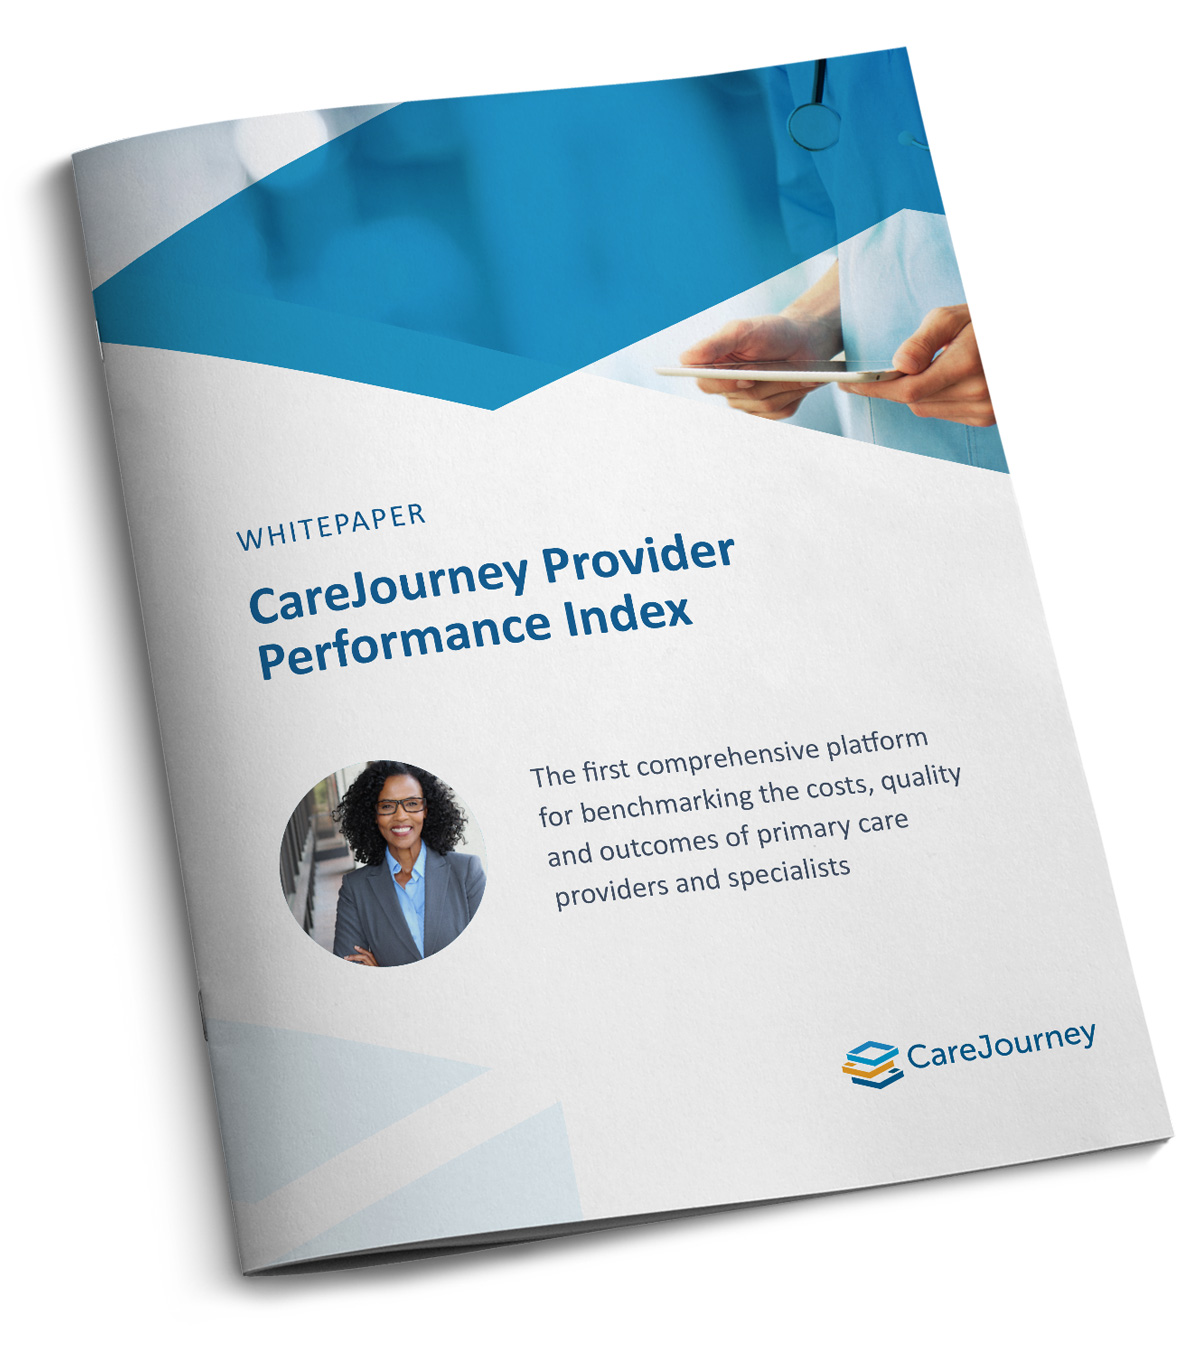 CareJourney Whitepaper Provider Performance Index